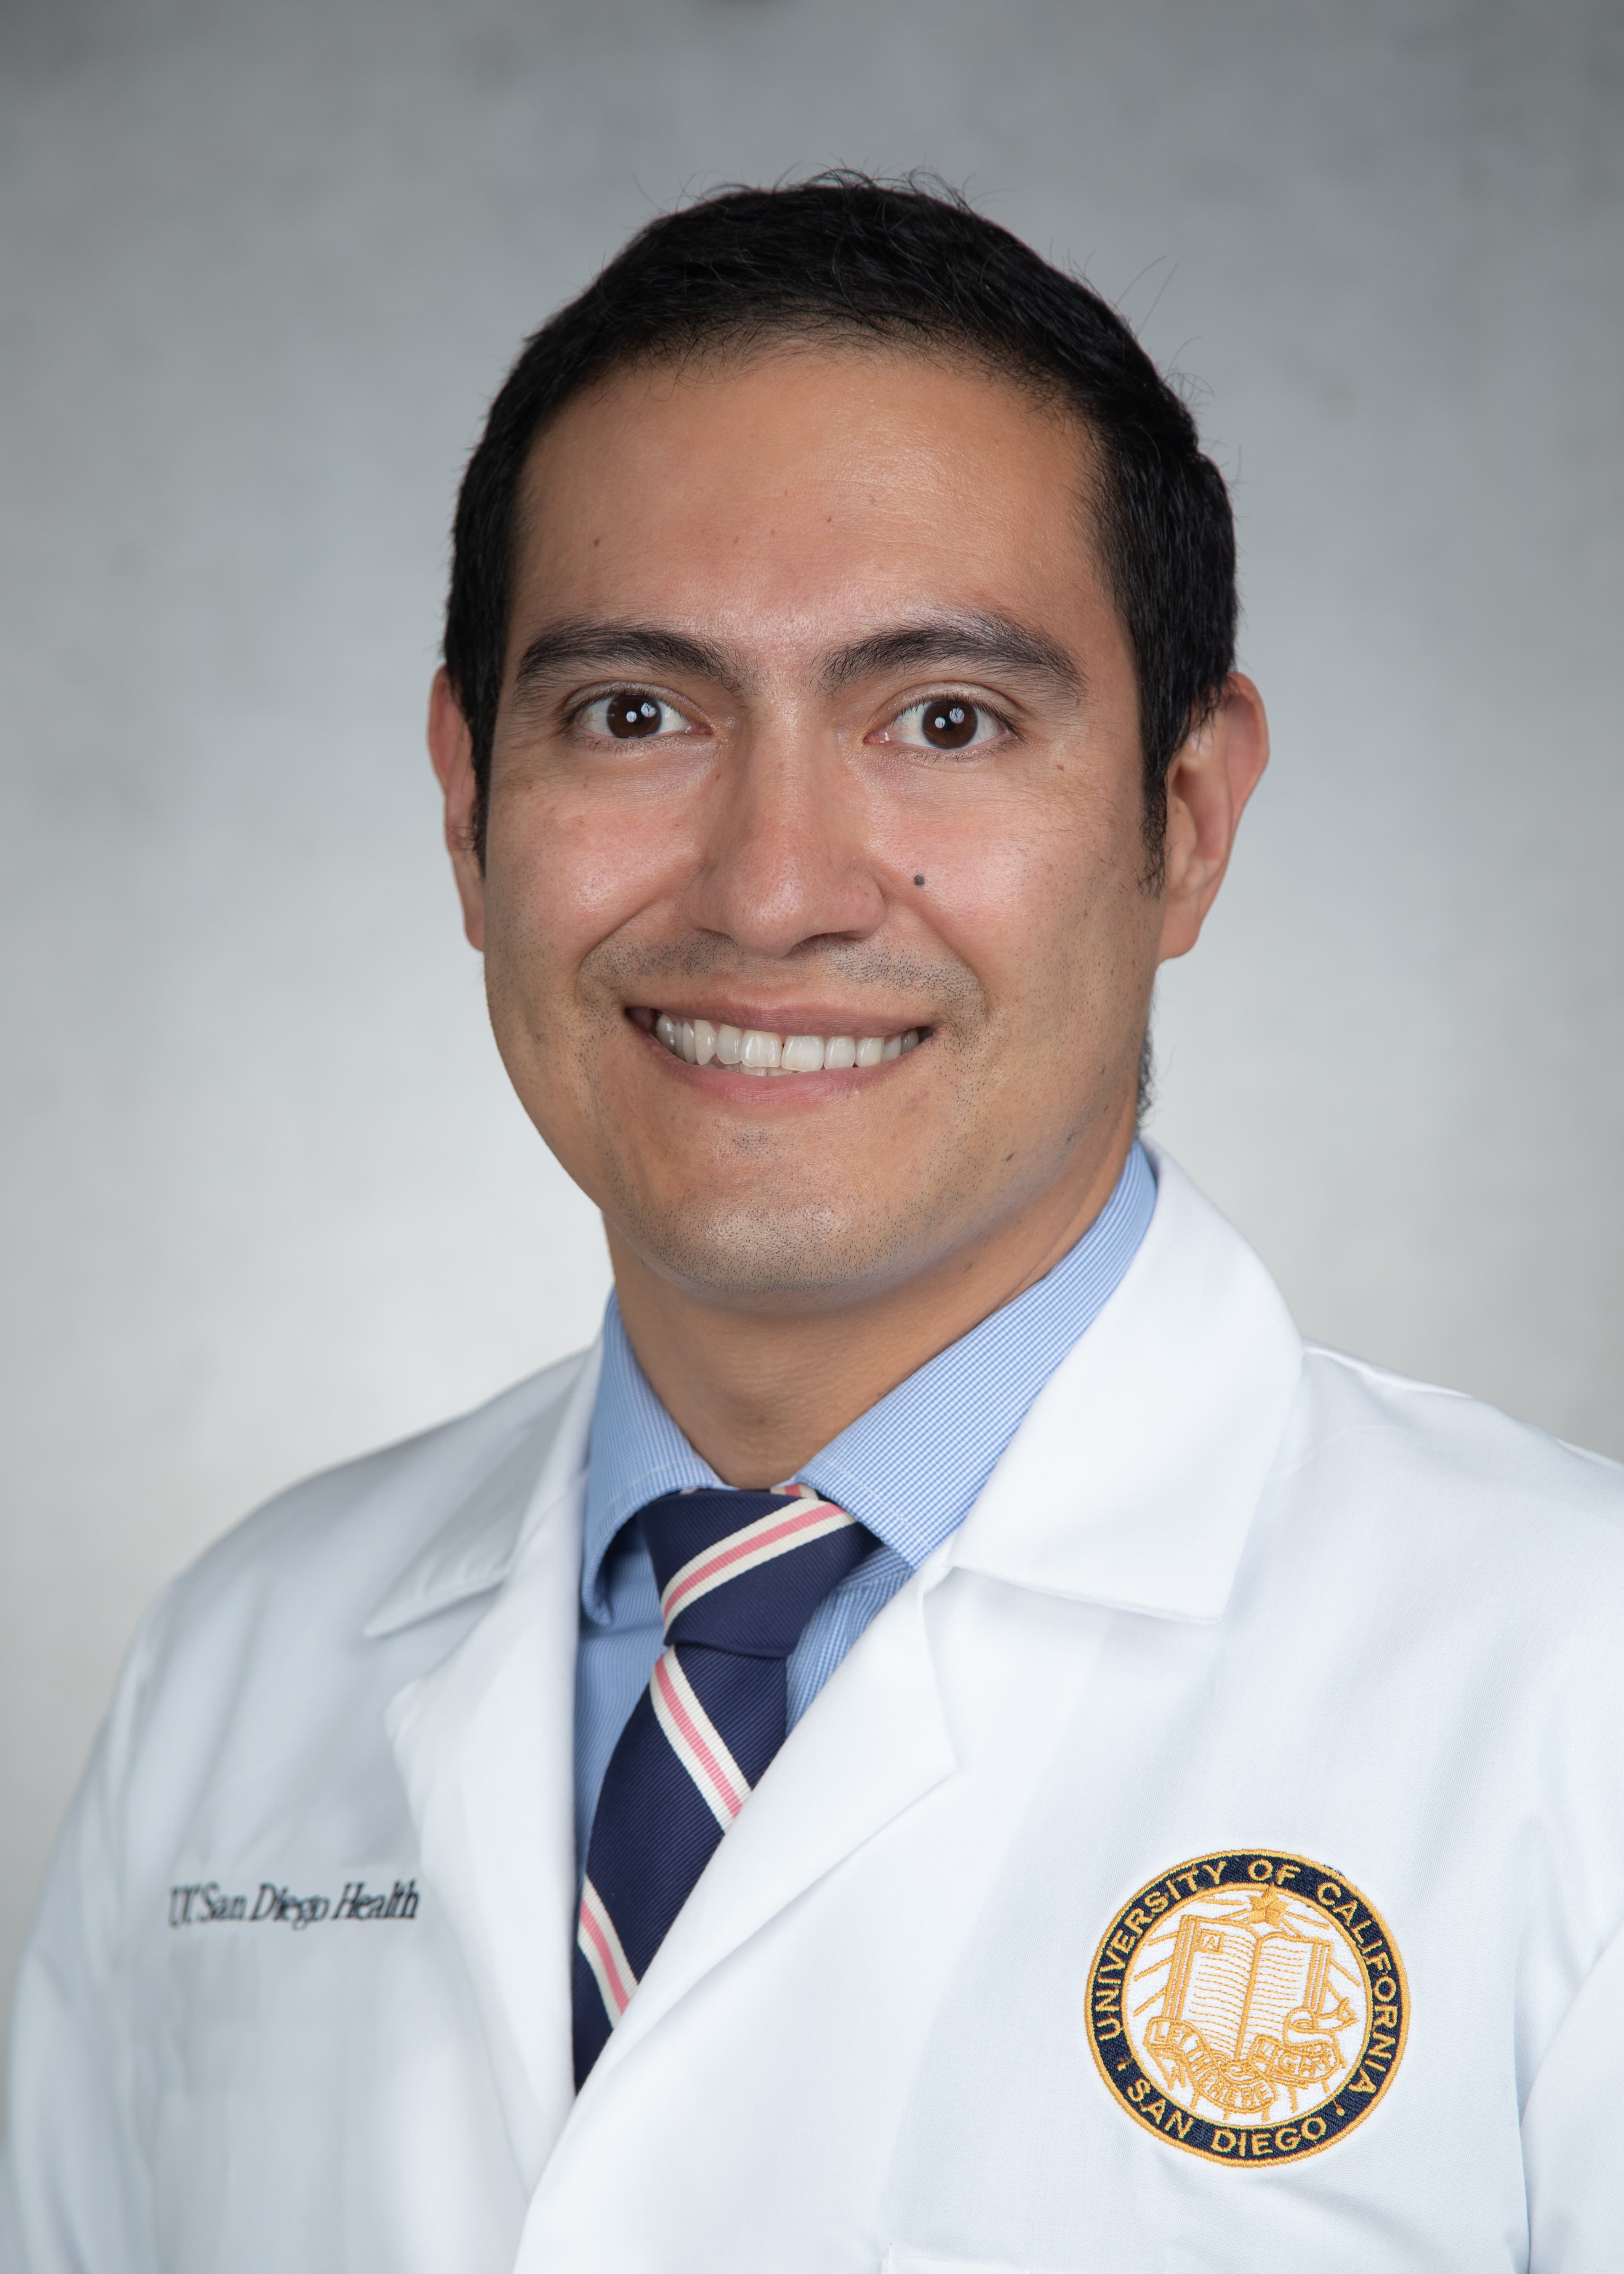 Jose Benjamin Cruz Rodriguez, MD, MPH